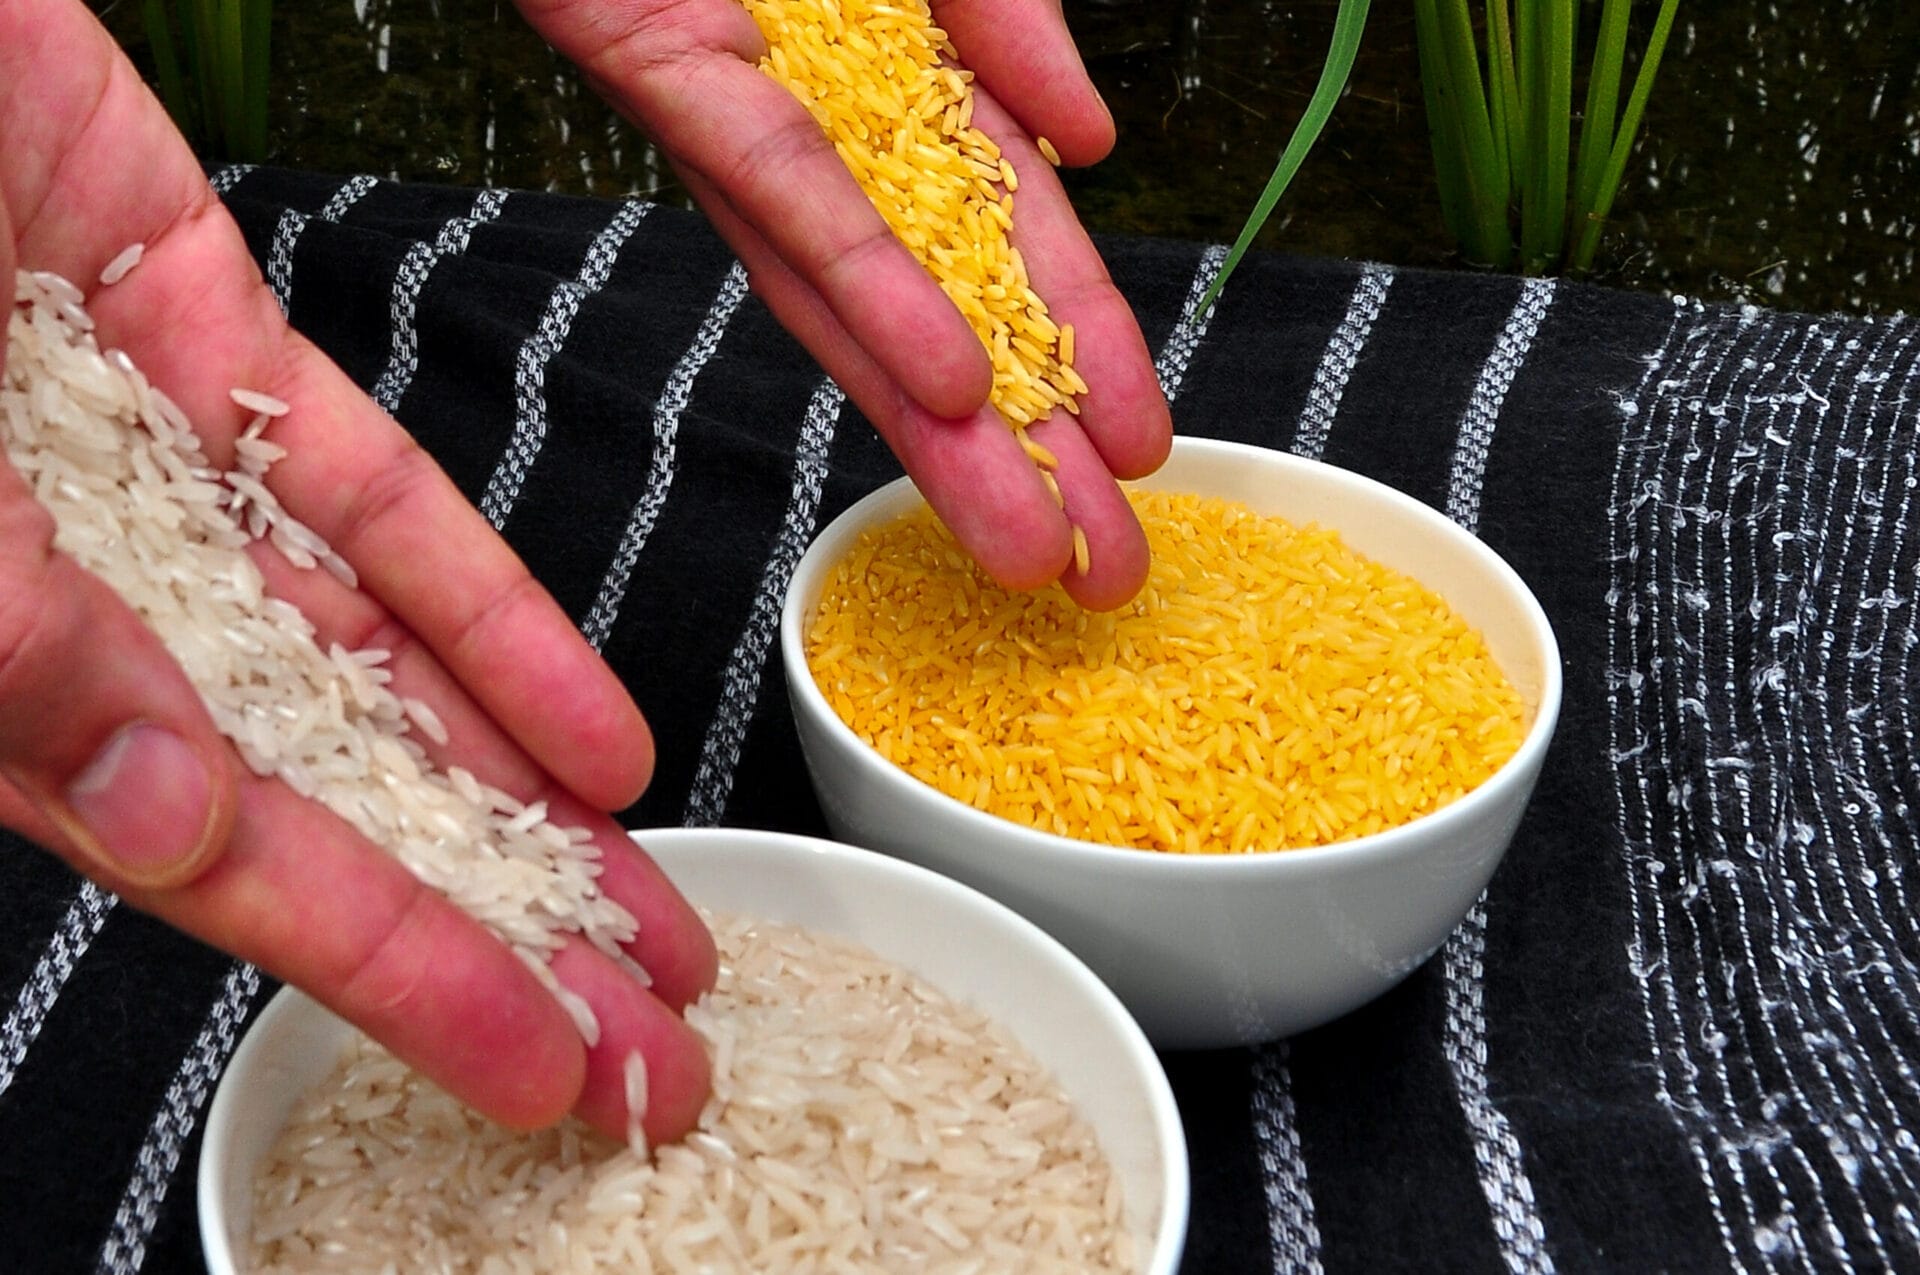 Golden Rice grain compared to white rice grain in screenhouse of Golden Rice plants.